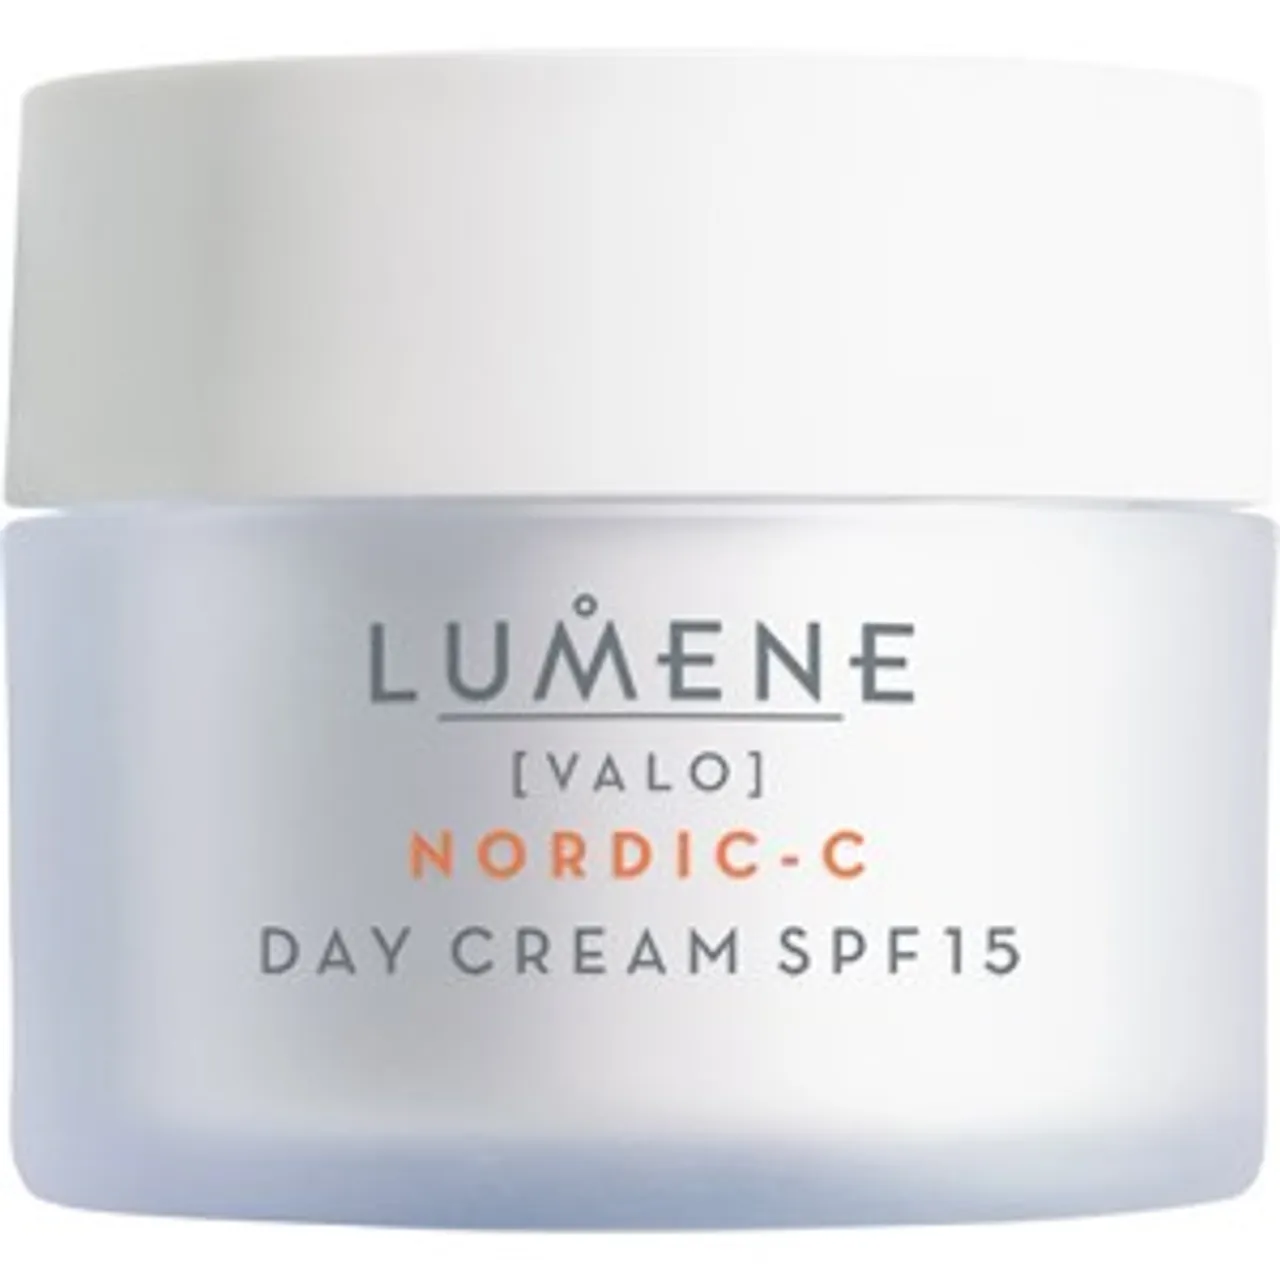 Lumene Day Cream SPF 15 Female 50 ml